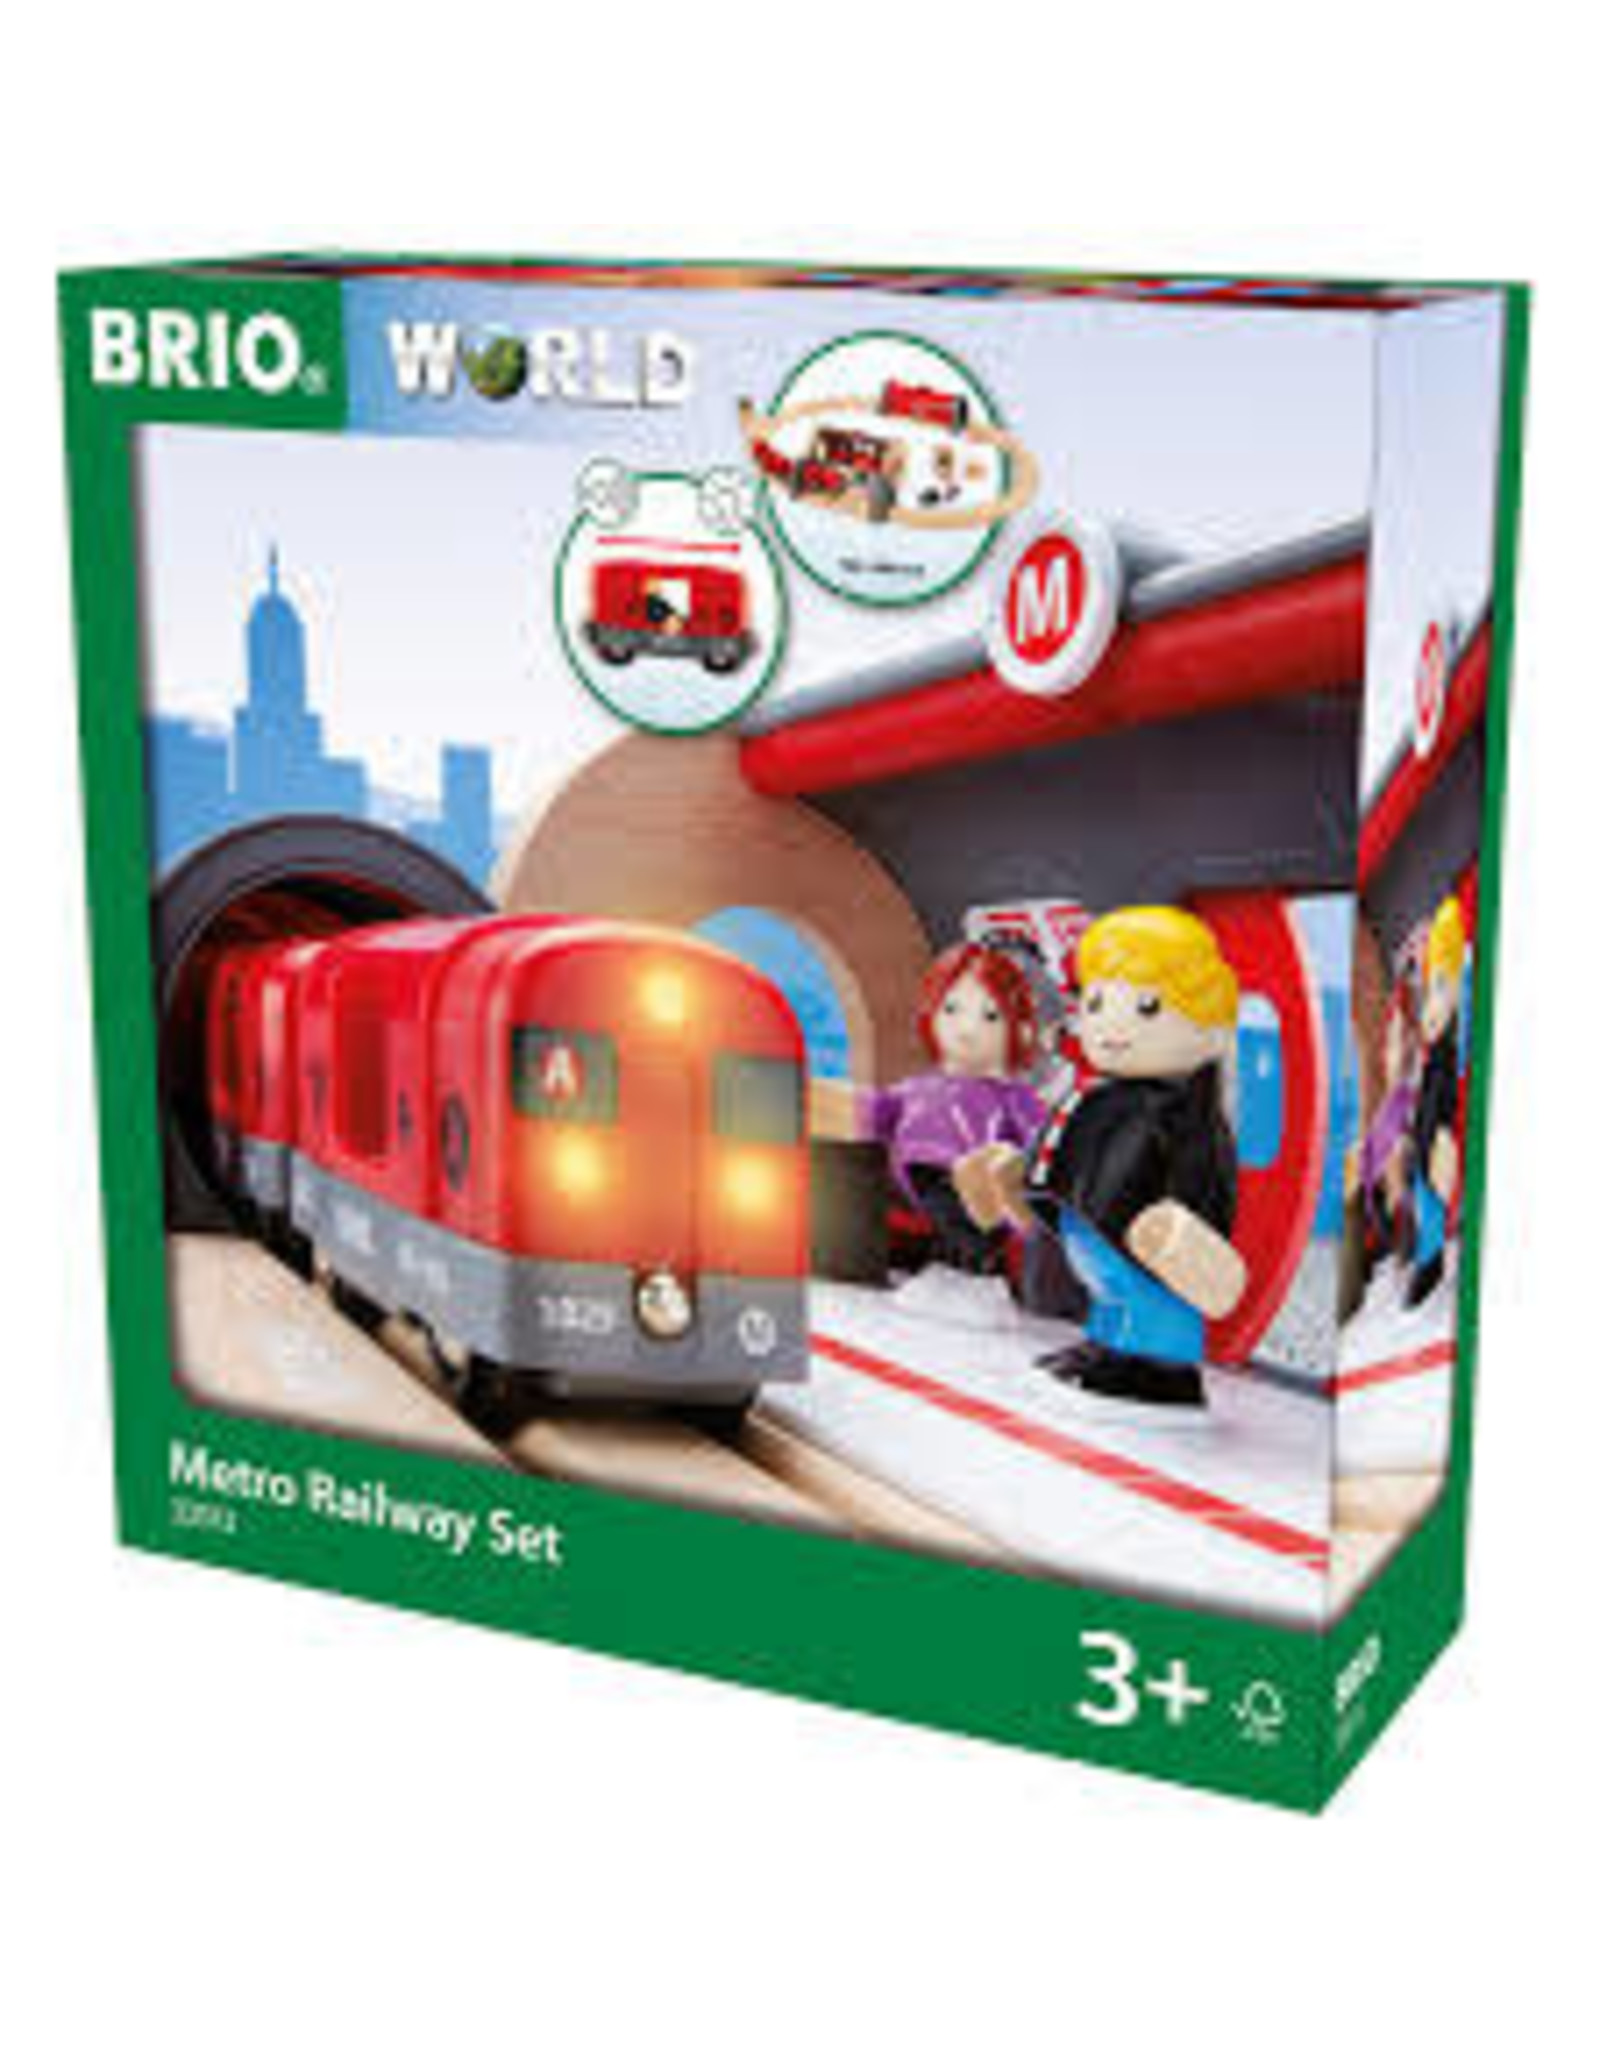 Merto Railway Set